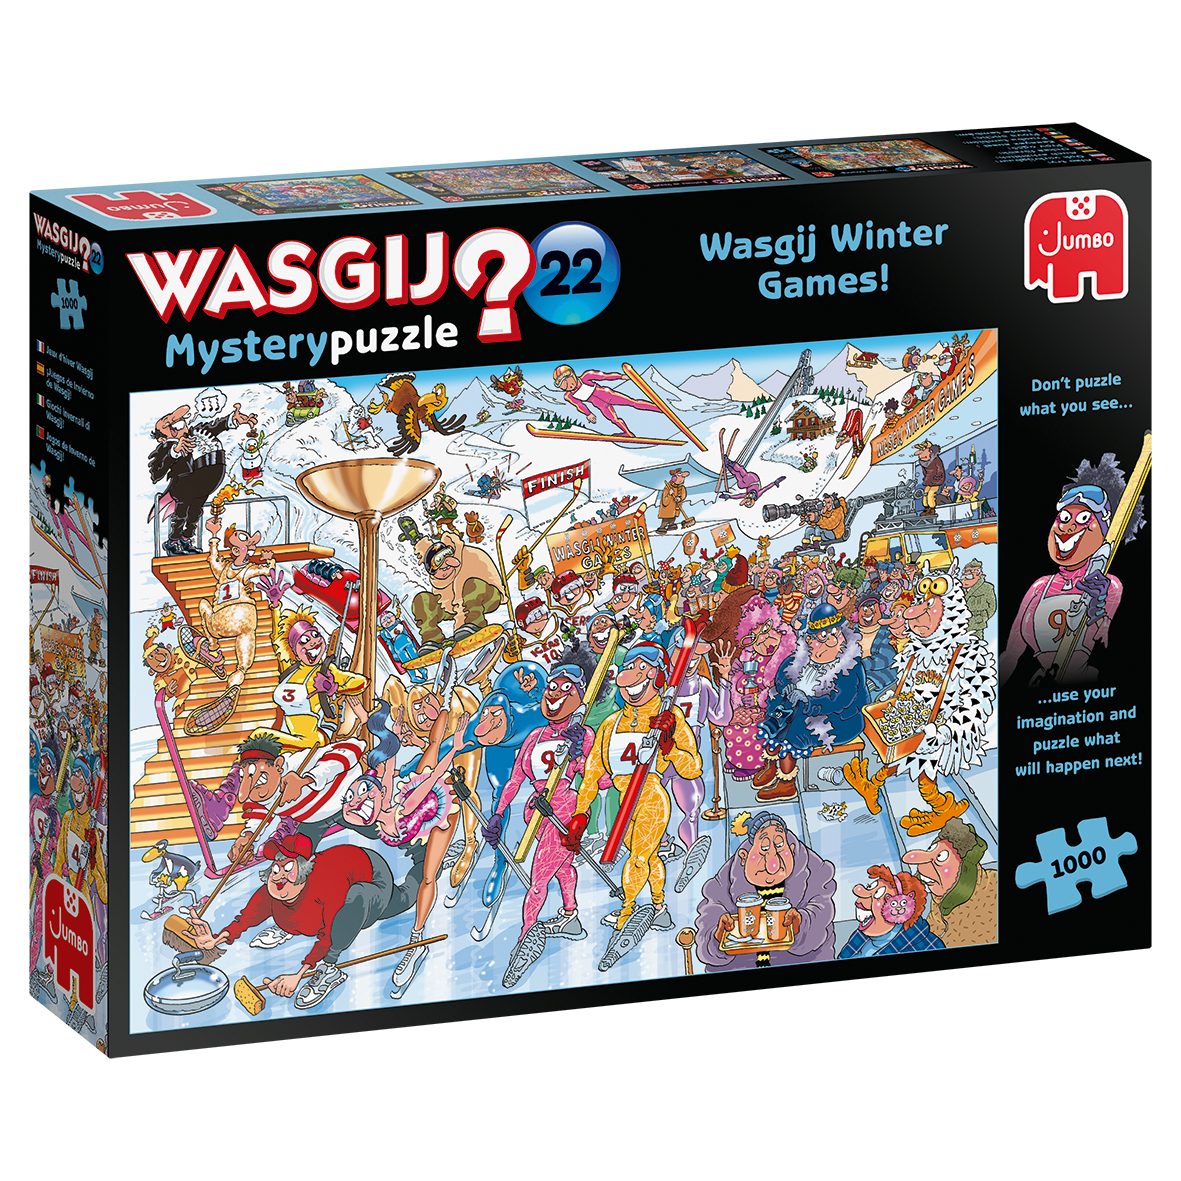 Jumbo Spiele Puzzle Wasgij Mystery Puzzleteile Die 1000 Winterspiele, Wasgij 22